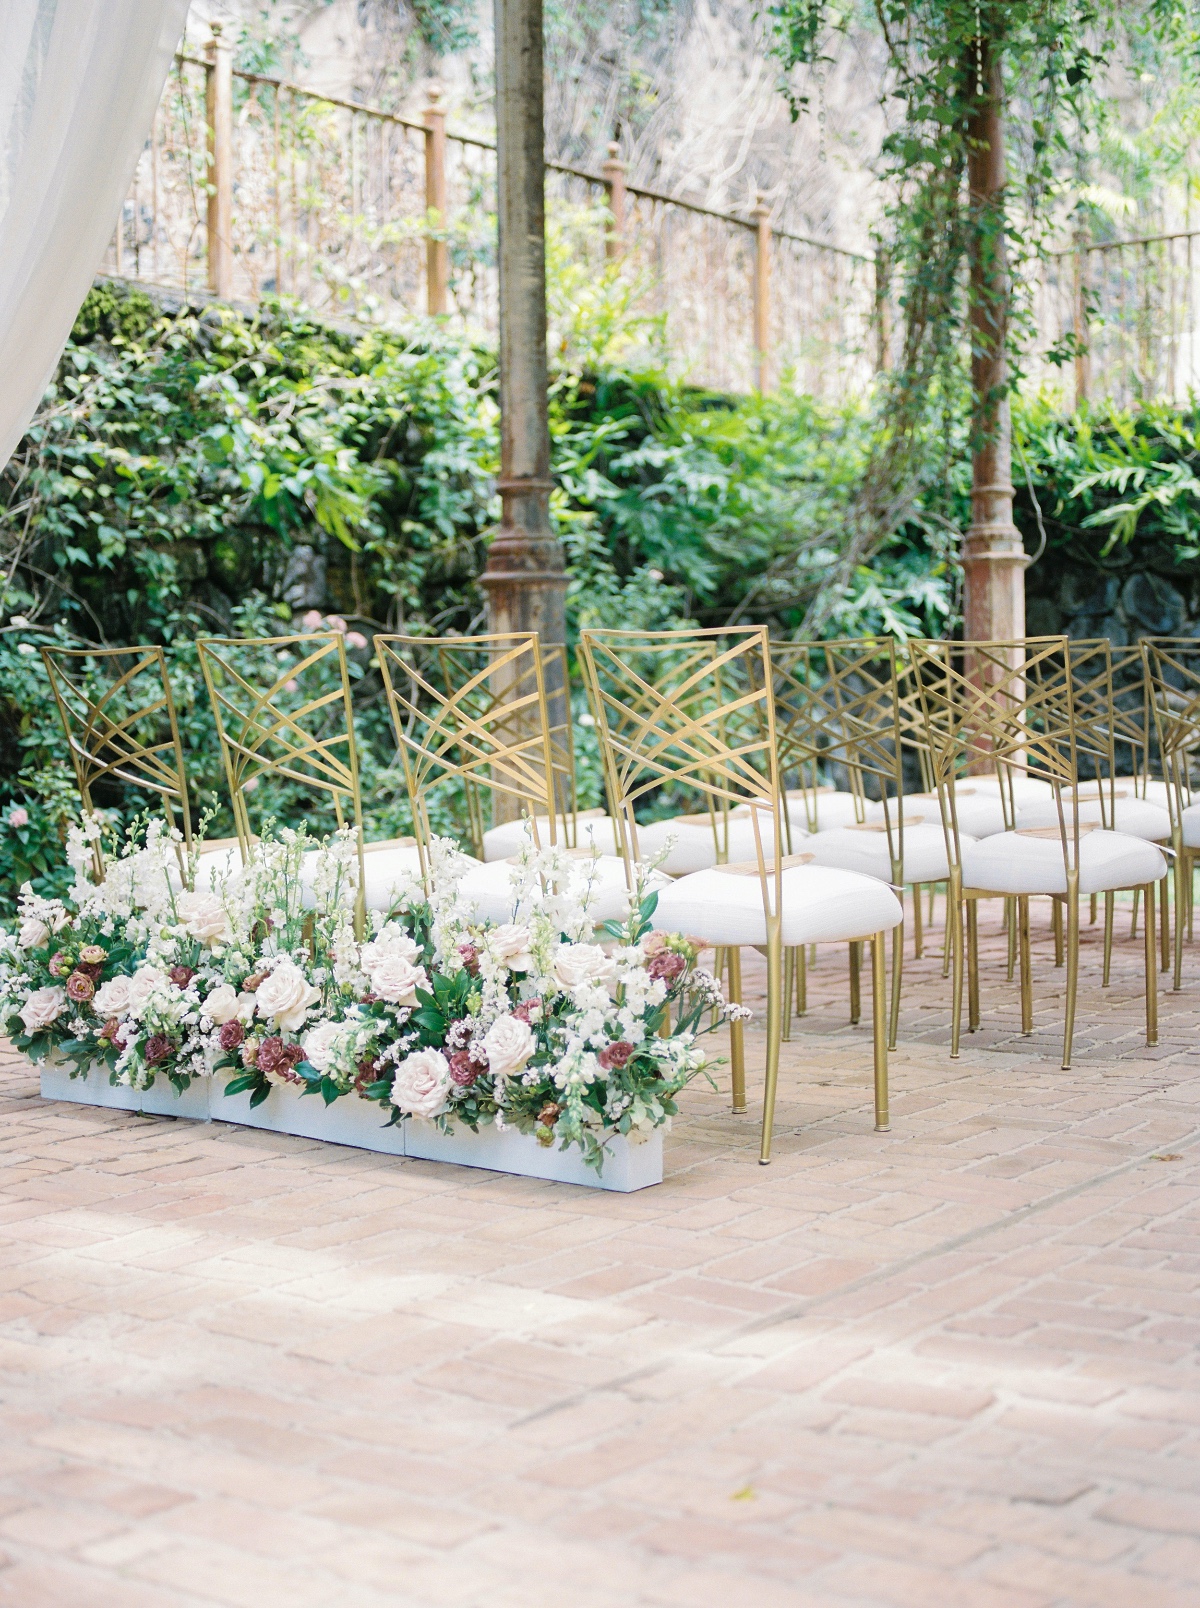 wedding flowers in planters